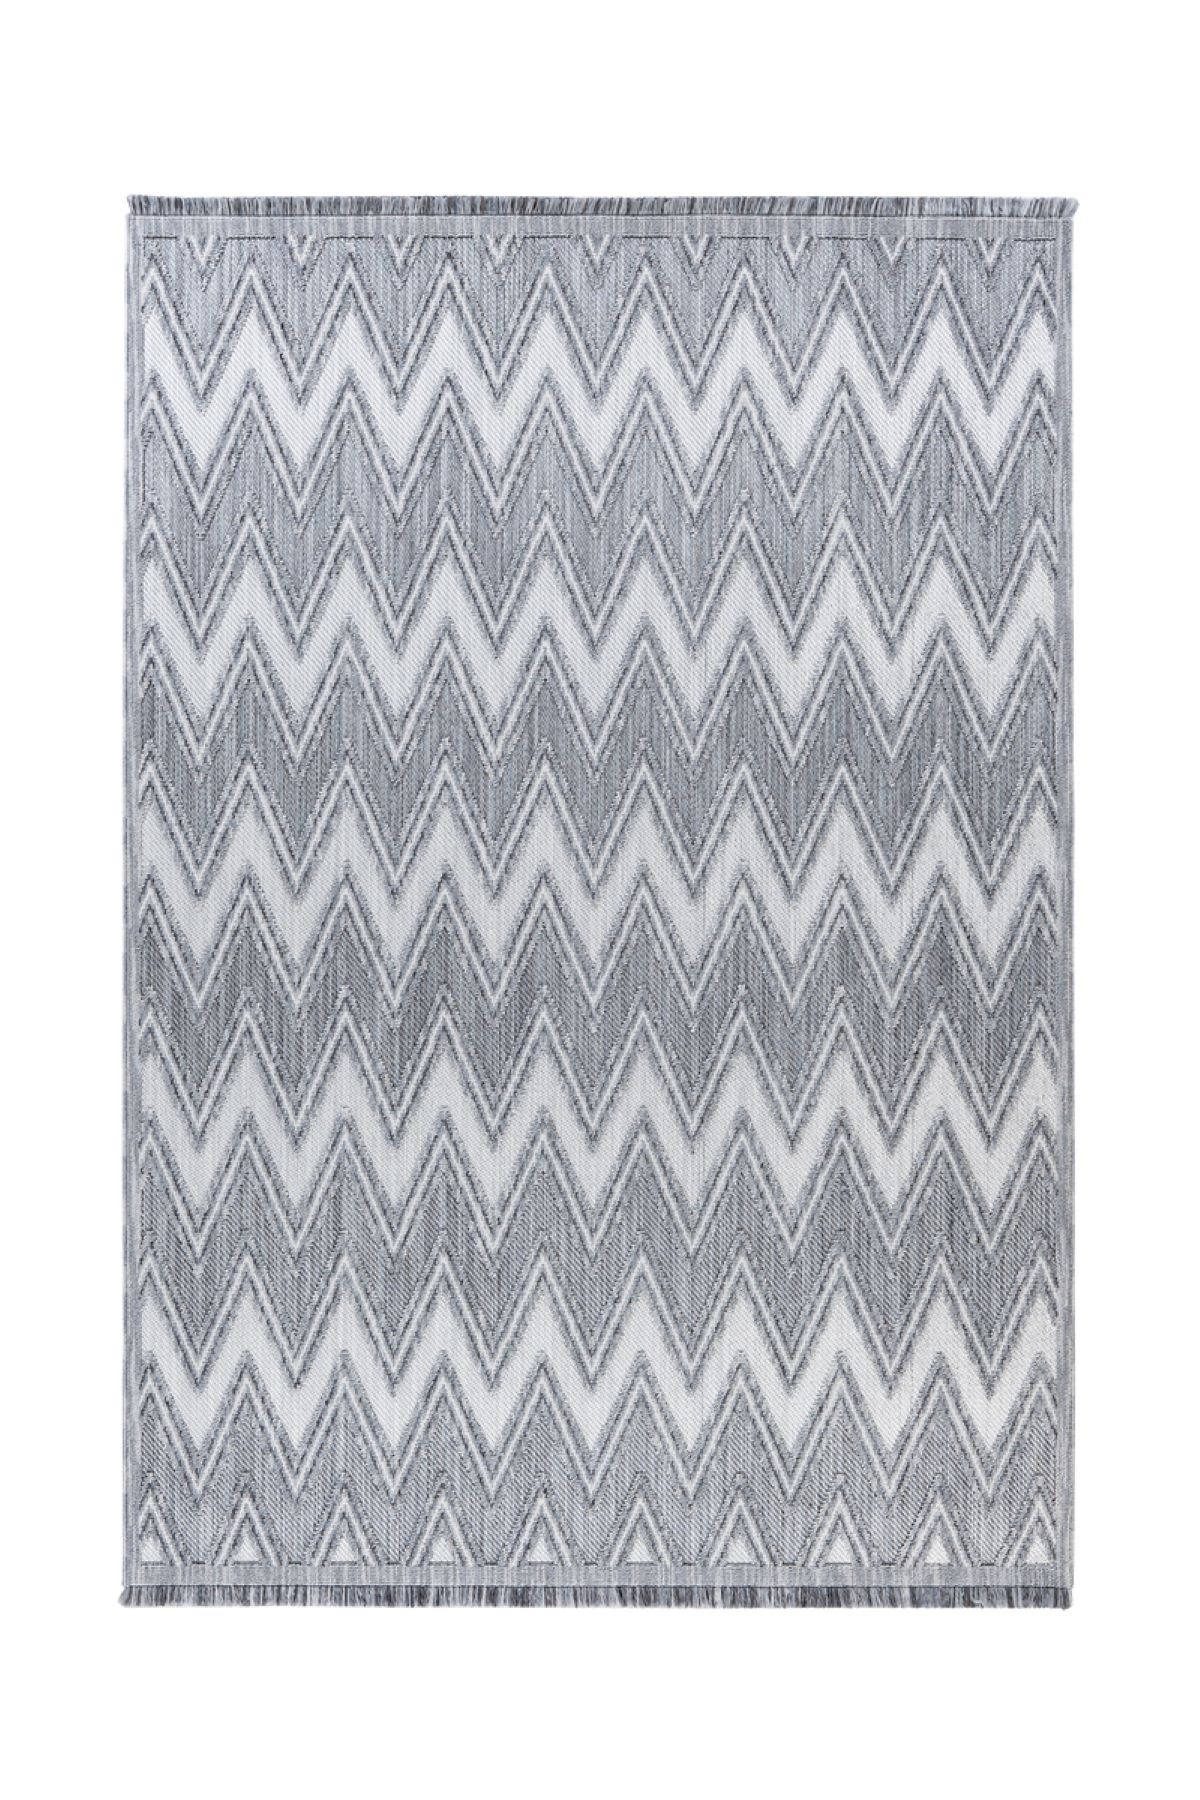 Platinum Sarai 225 szürke fehér modern szőnyeg